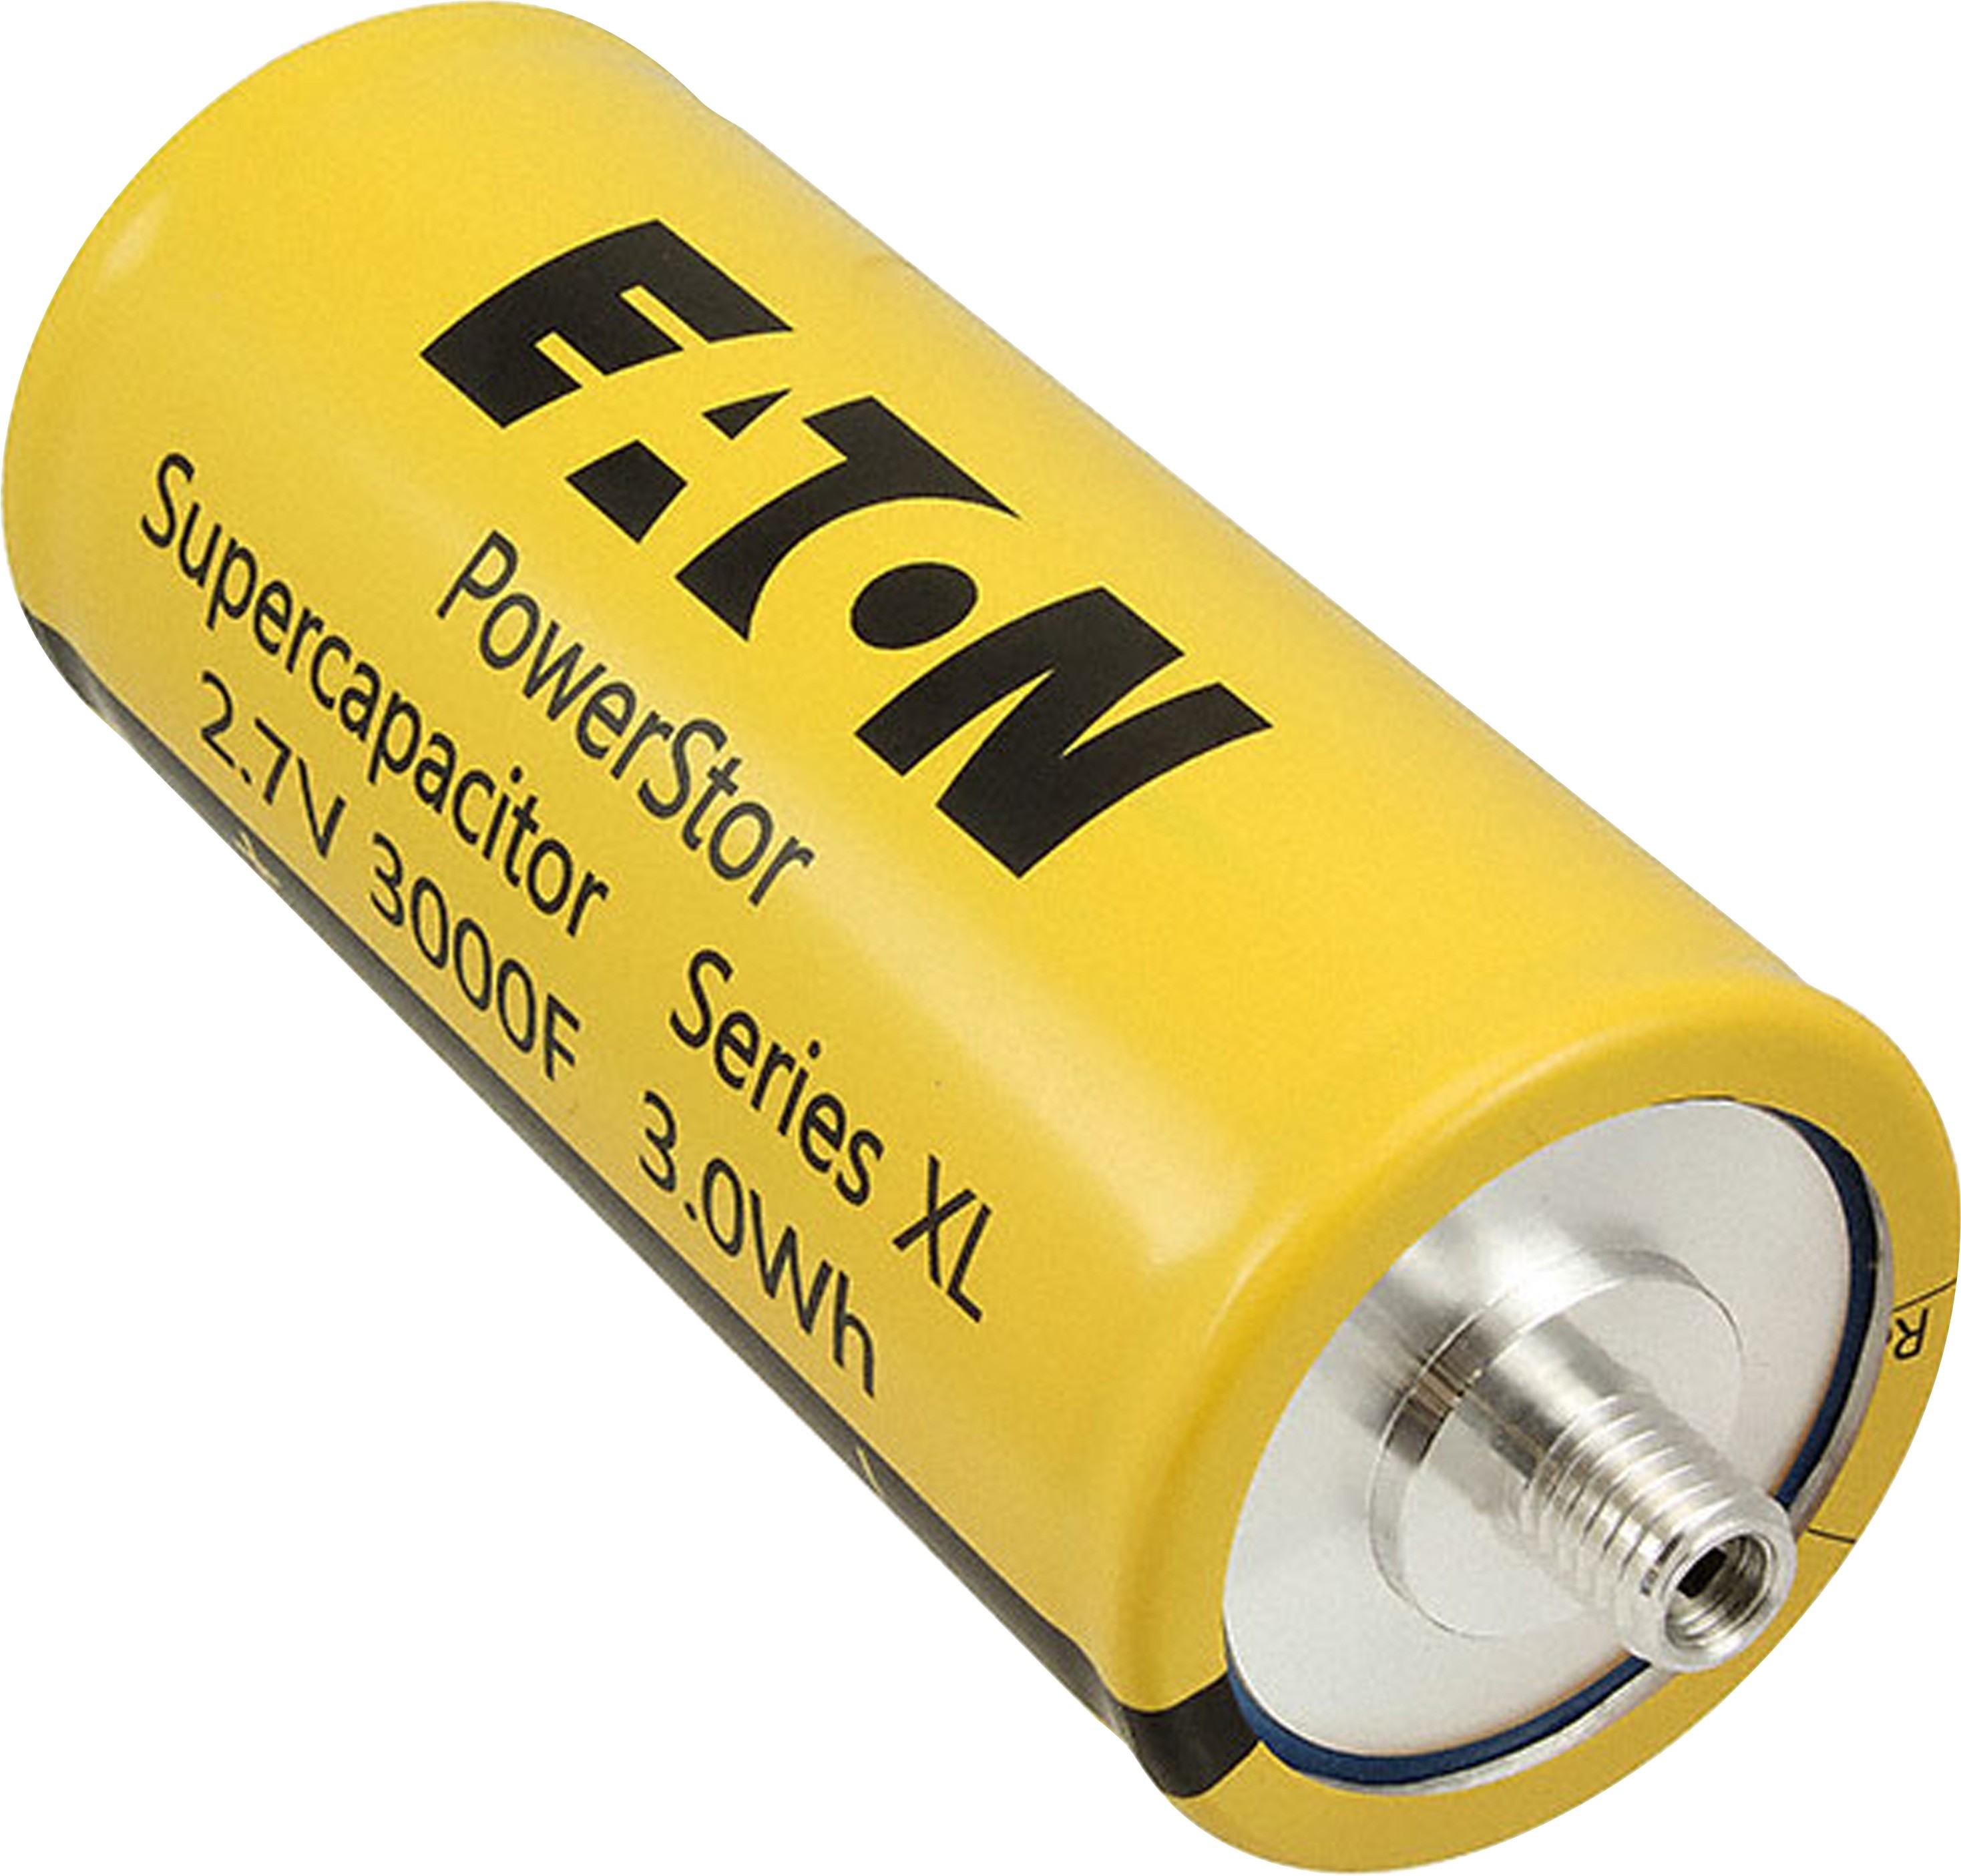 EATON XL60-2R7308T-R Supercondensateur 2.7V 3000F